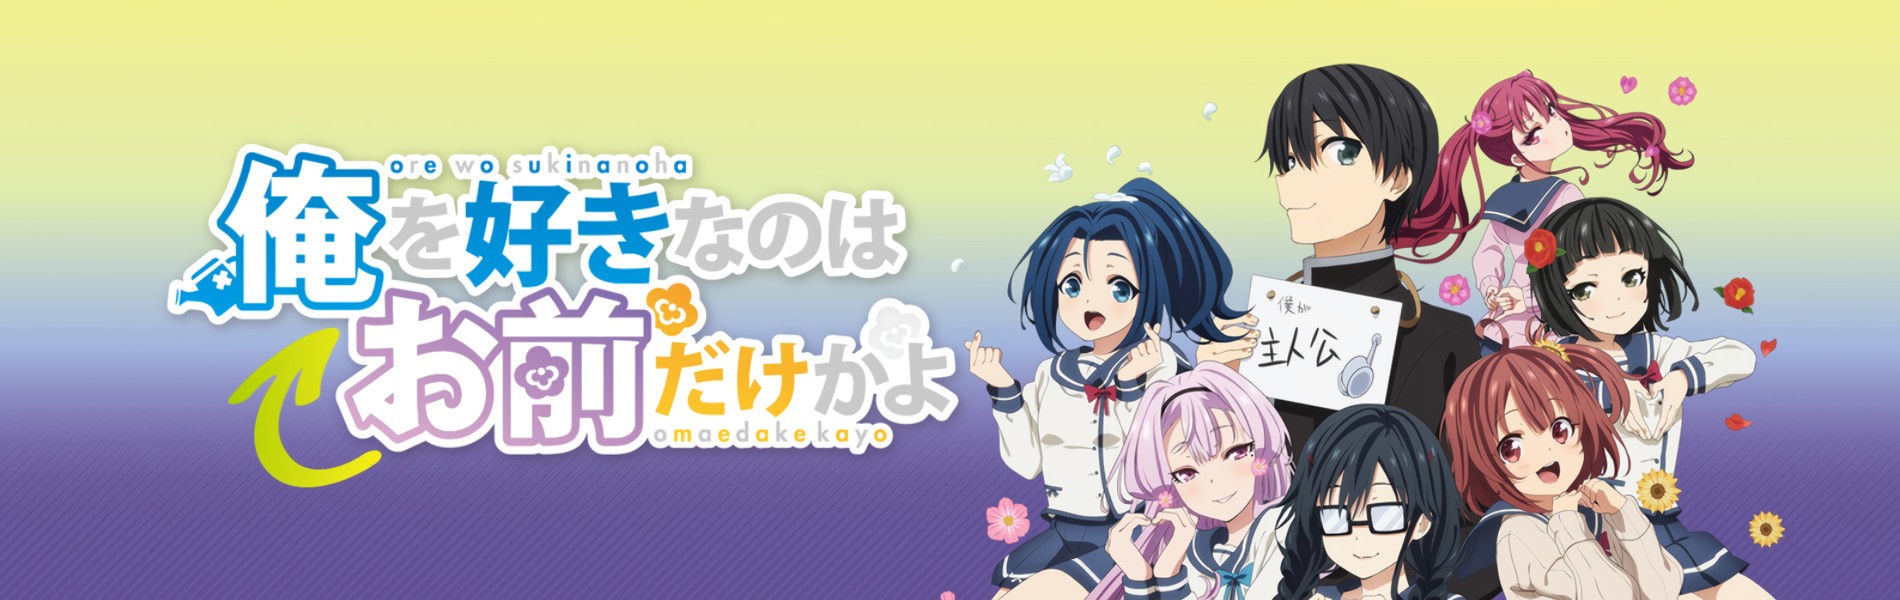 New Ore wo Suki nano wa Omae dake ka yo Anime Visual Revealed